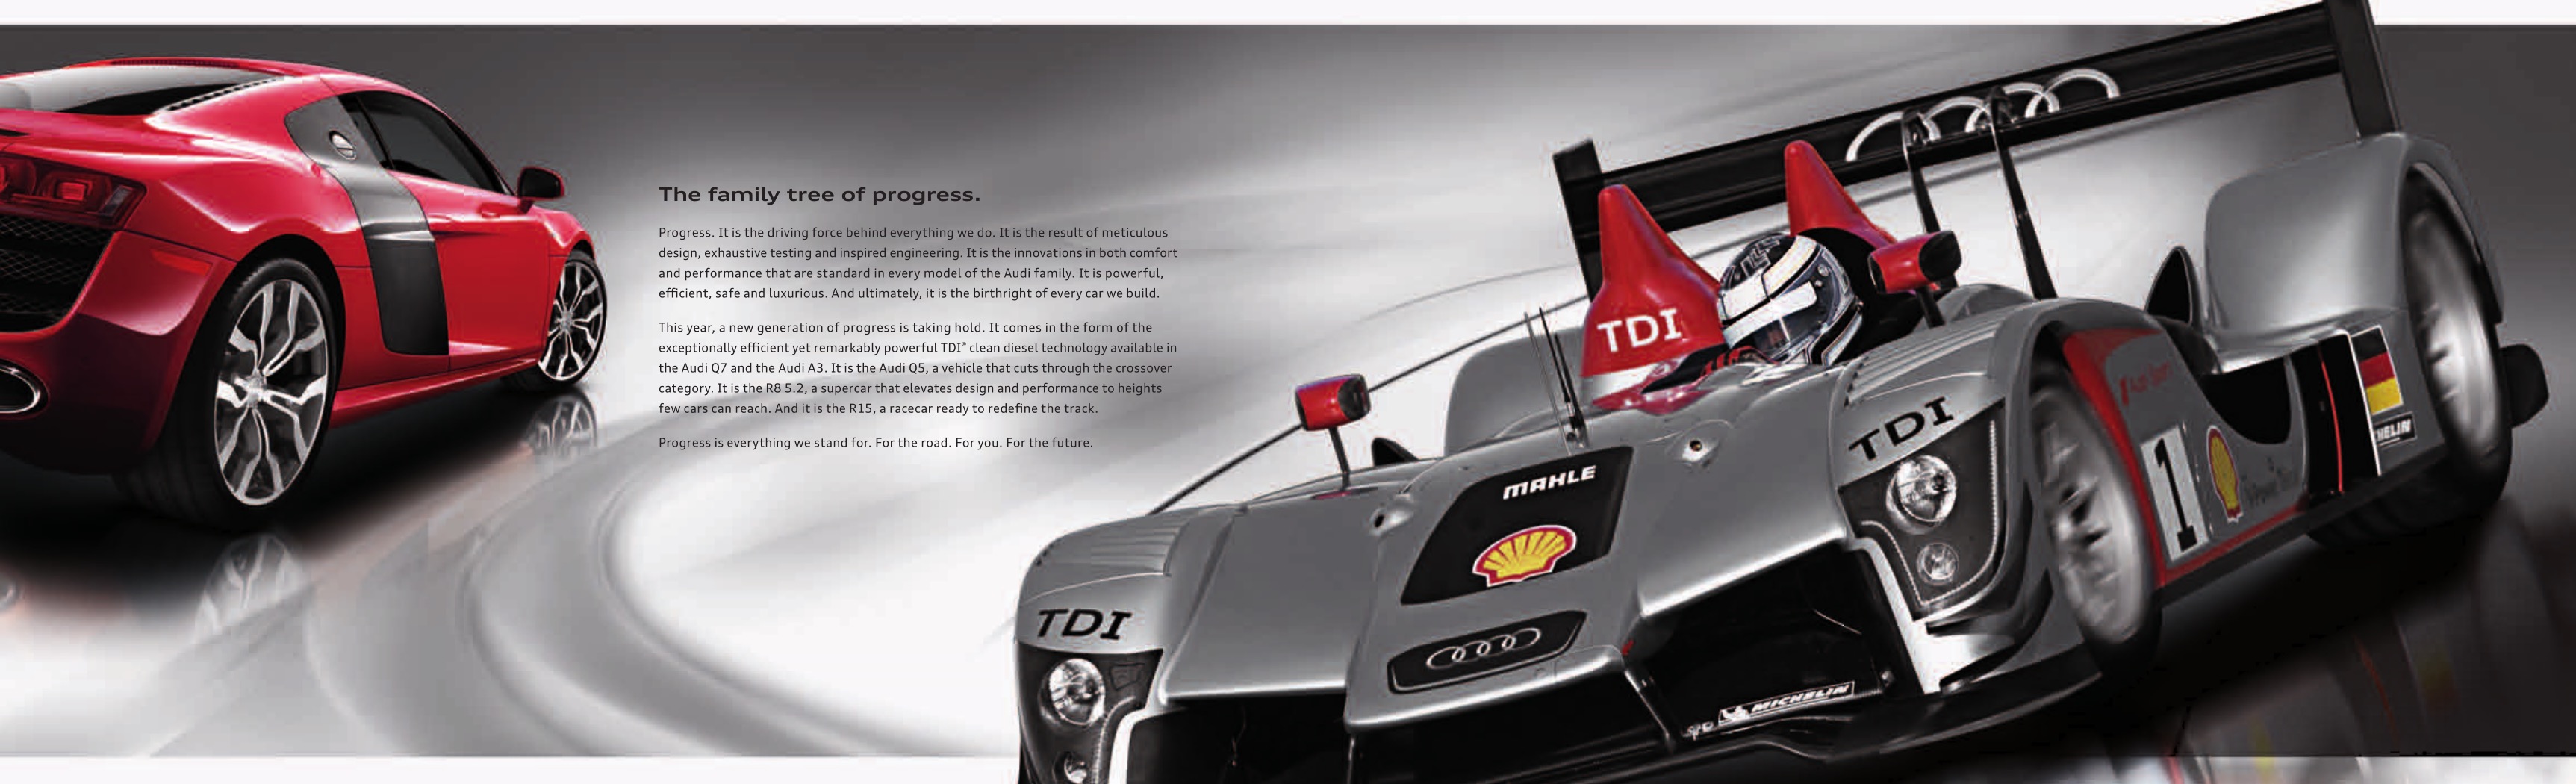 2010 Audi Brochure Page 8